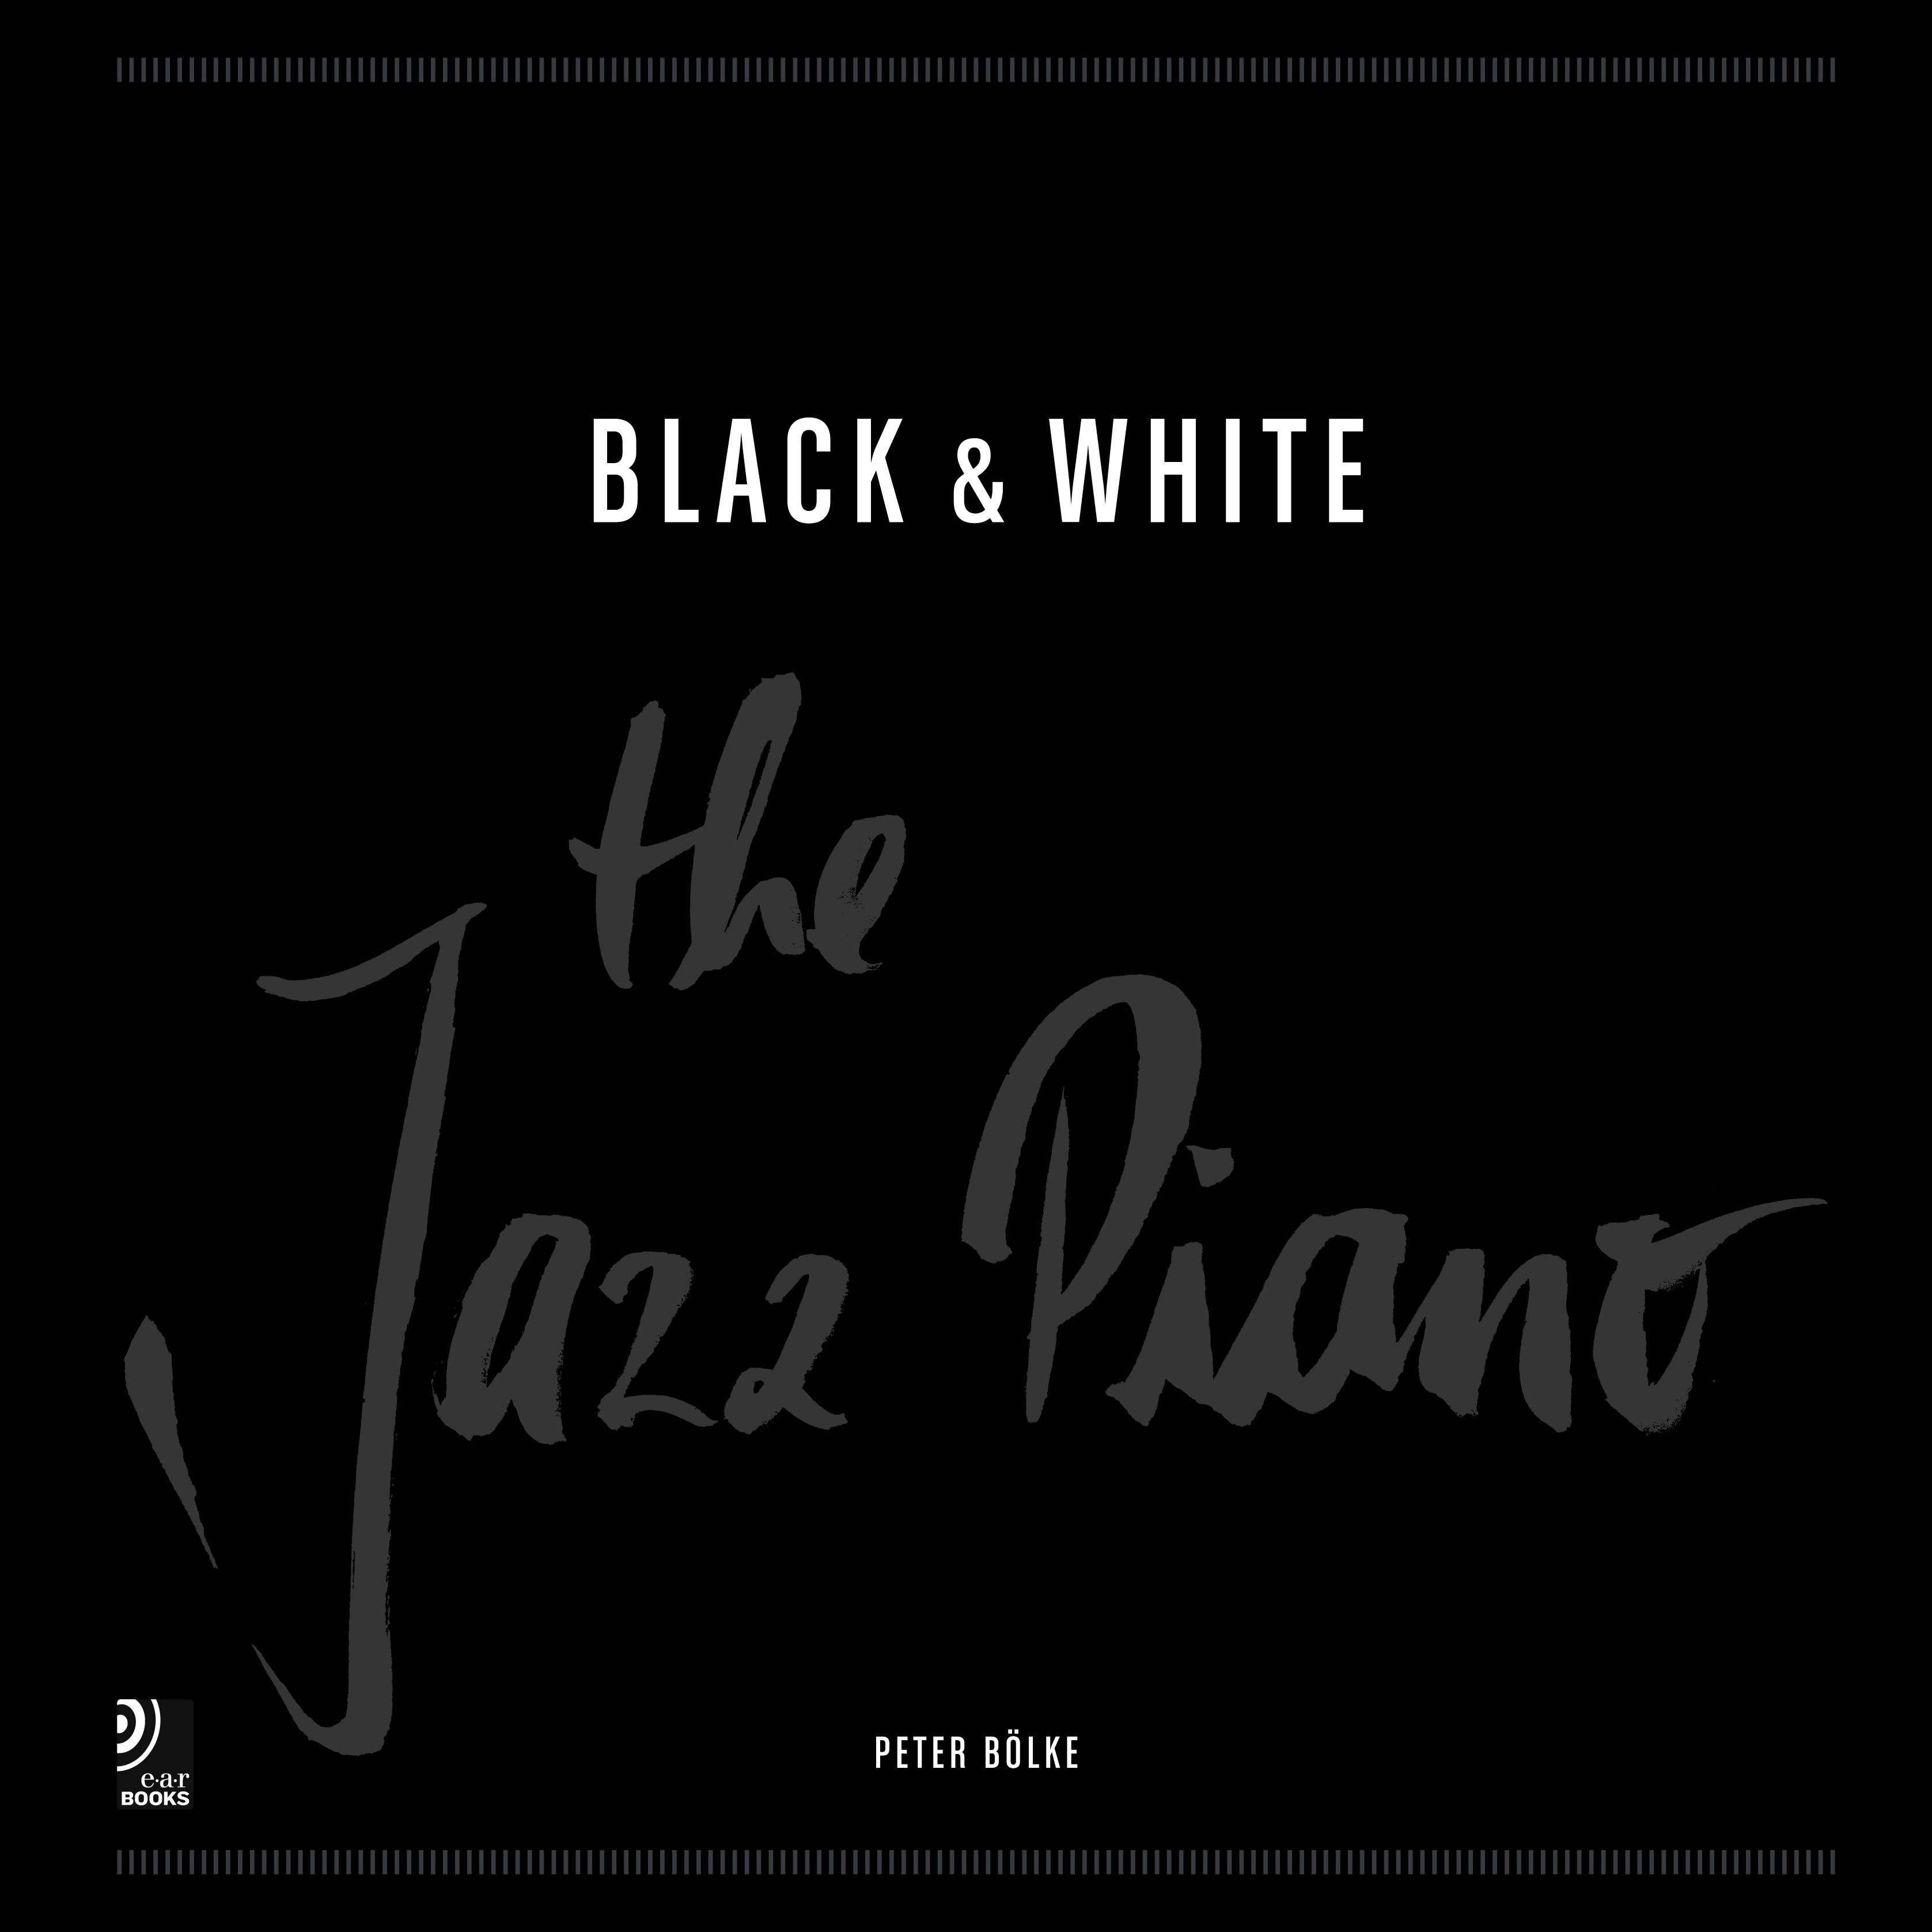 Black & White : The Jazz piano